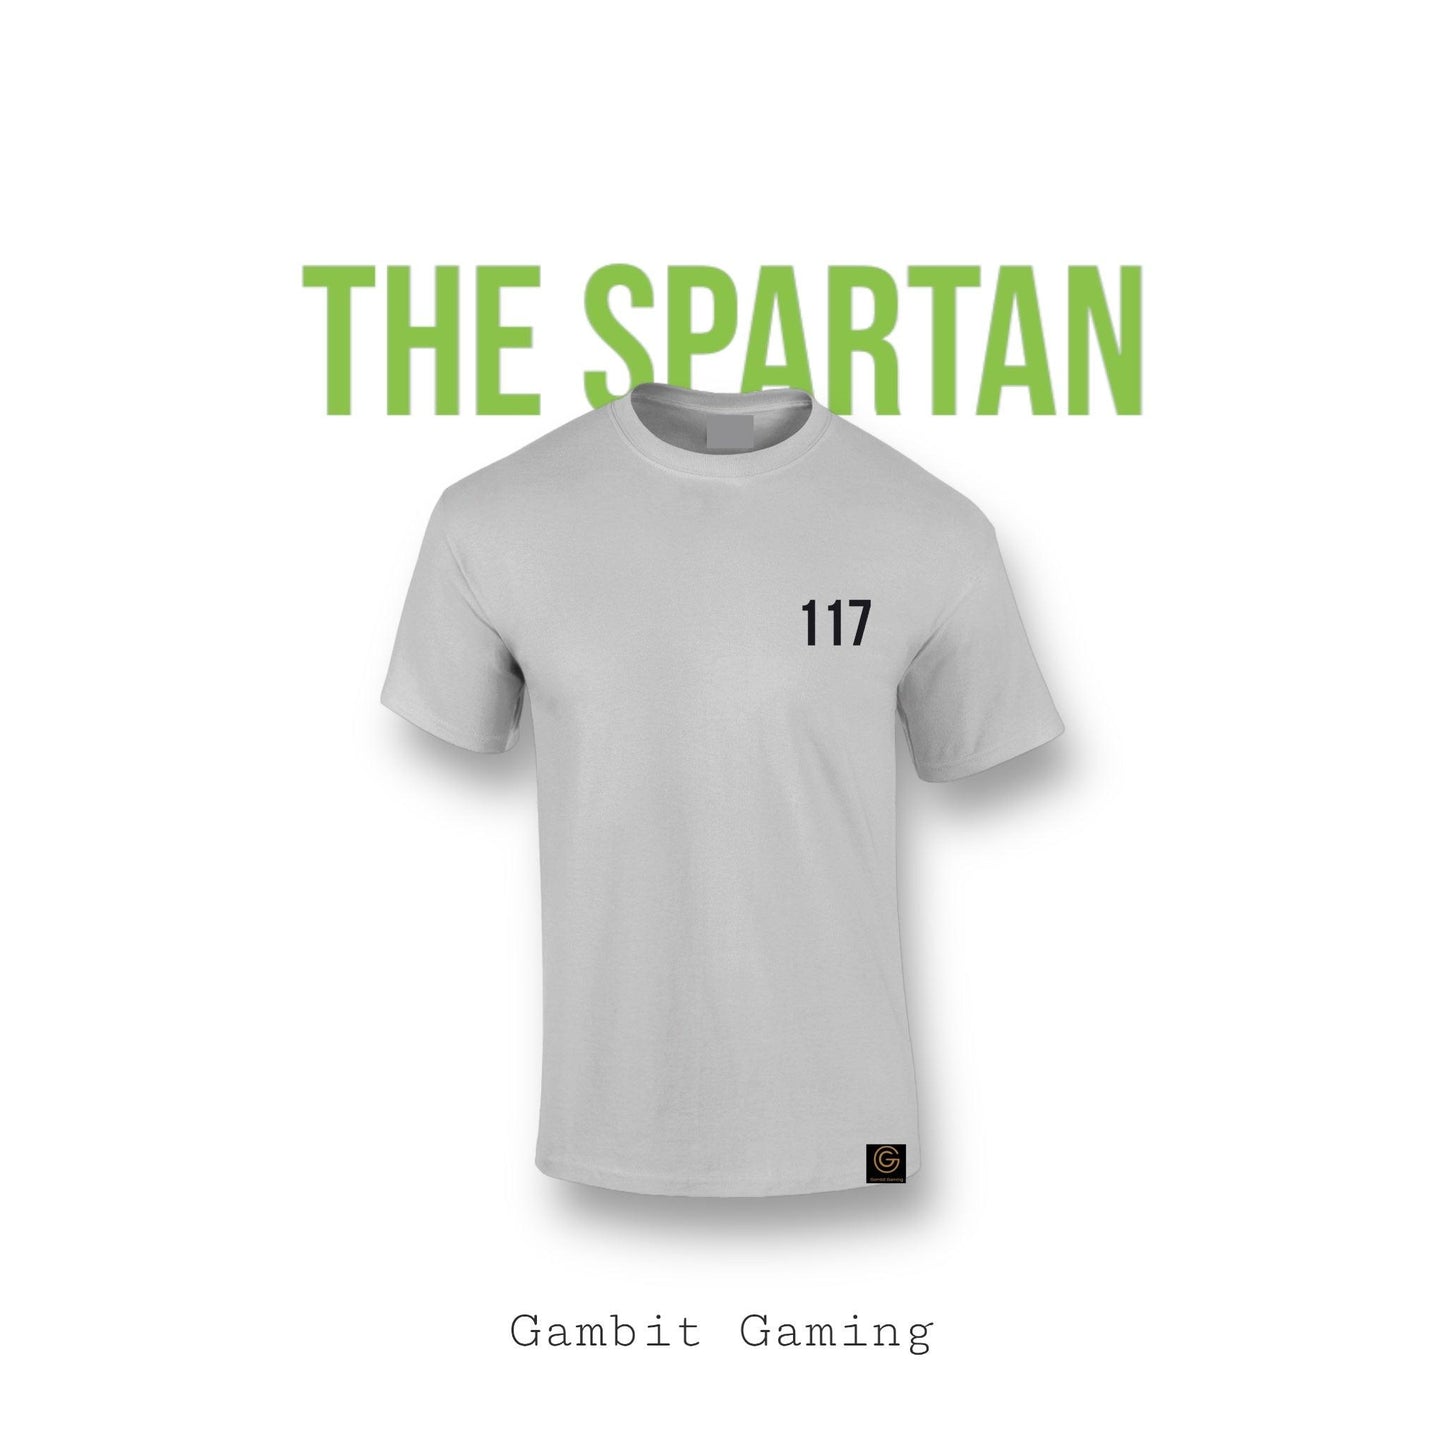 The Spartan - Gambit Gaming